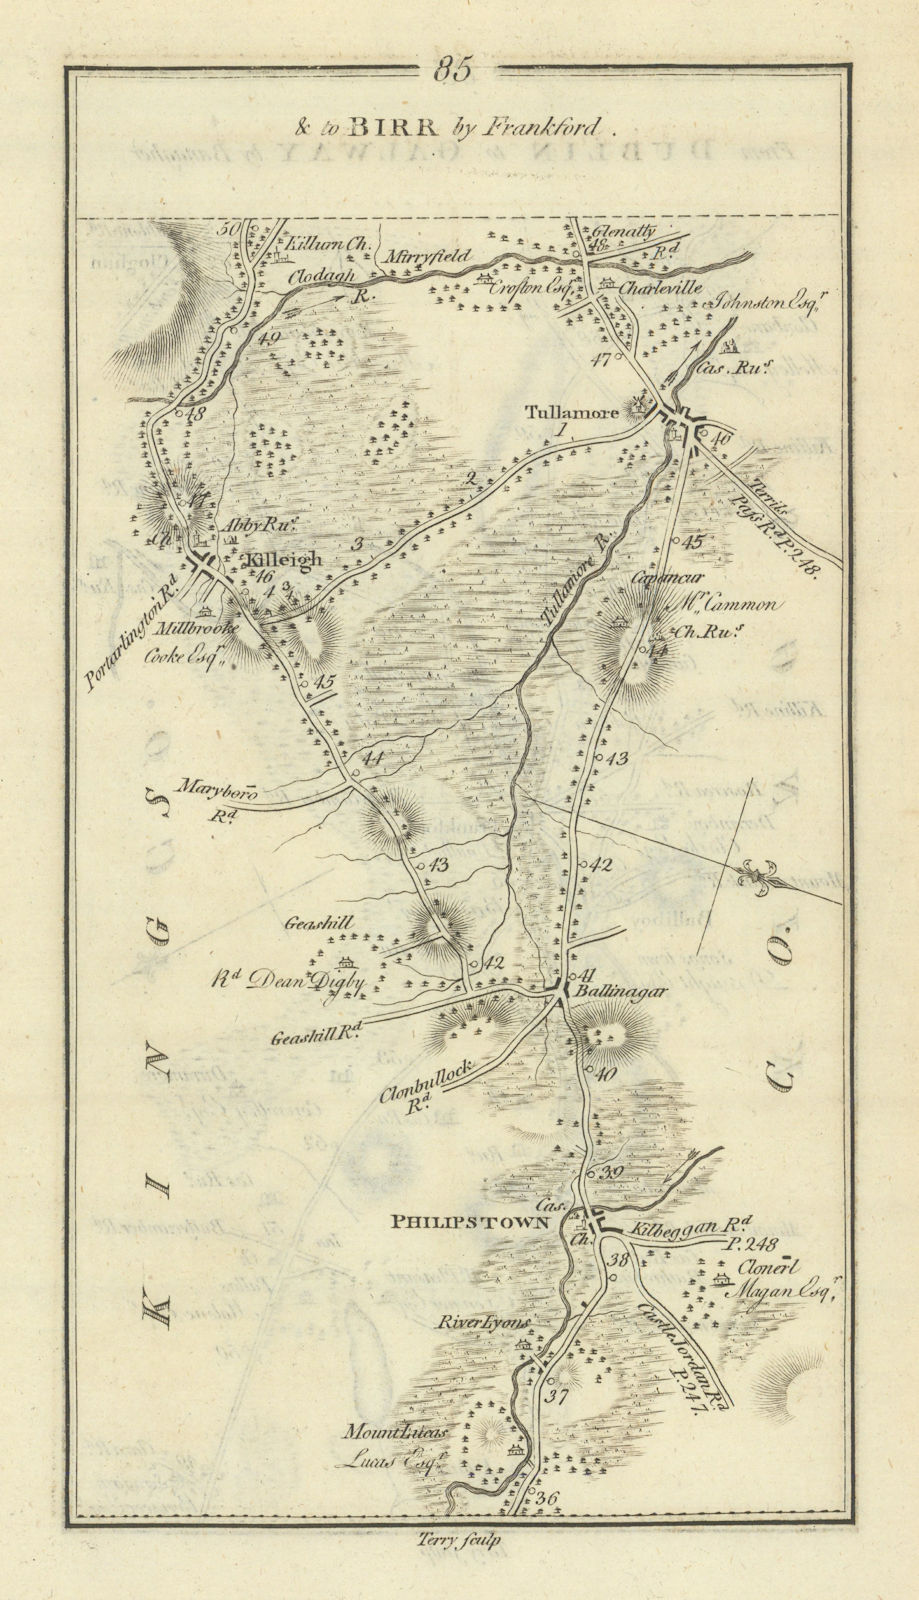 Associate Product #85 to Birr by Frankford. Tullamore Ballinagar Daingean. TAYLOR/SKINNER 1778 map